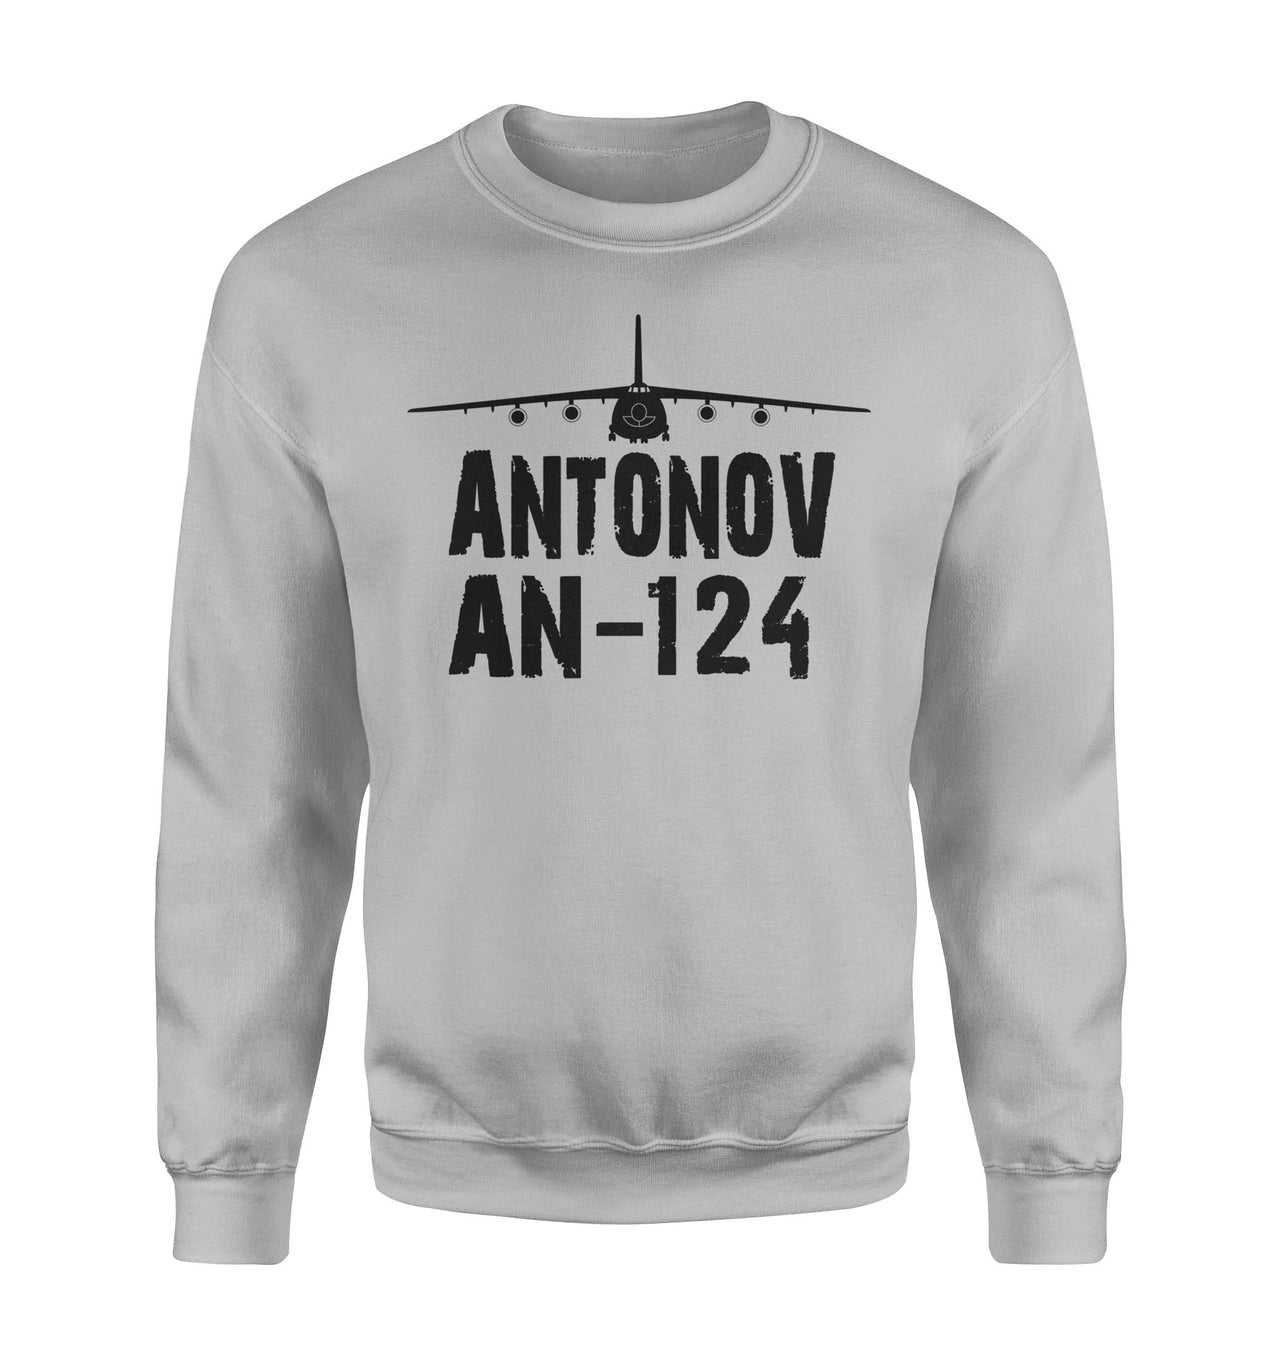 Antonov AN-124 & Plane Designed Sweatshirts